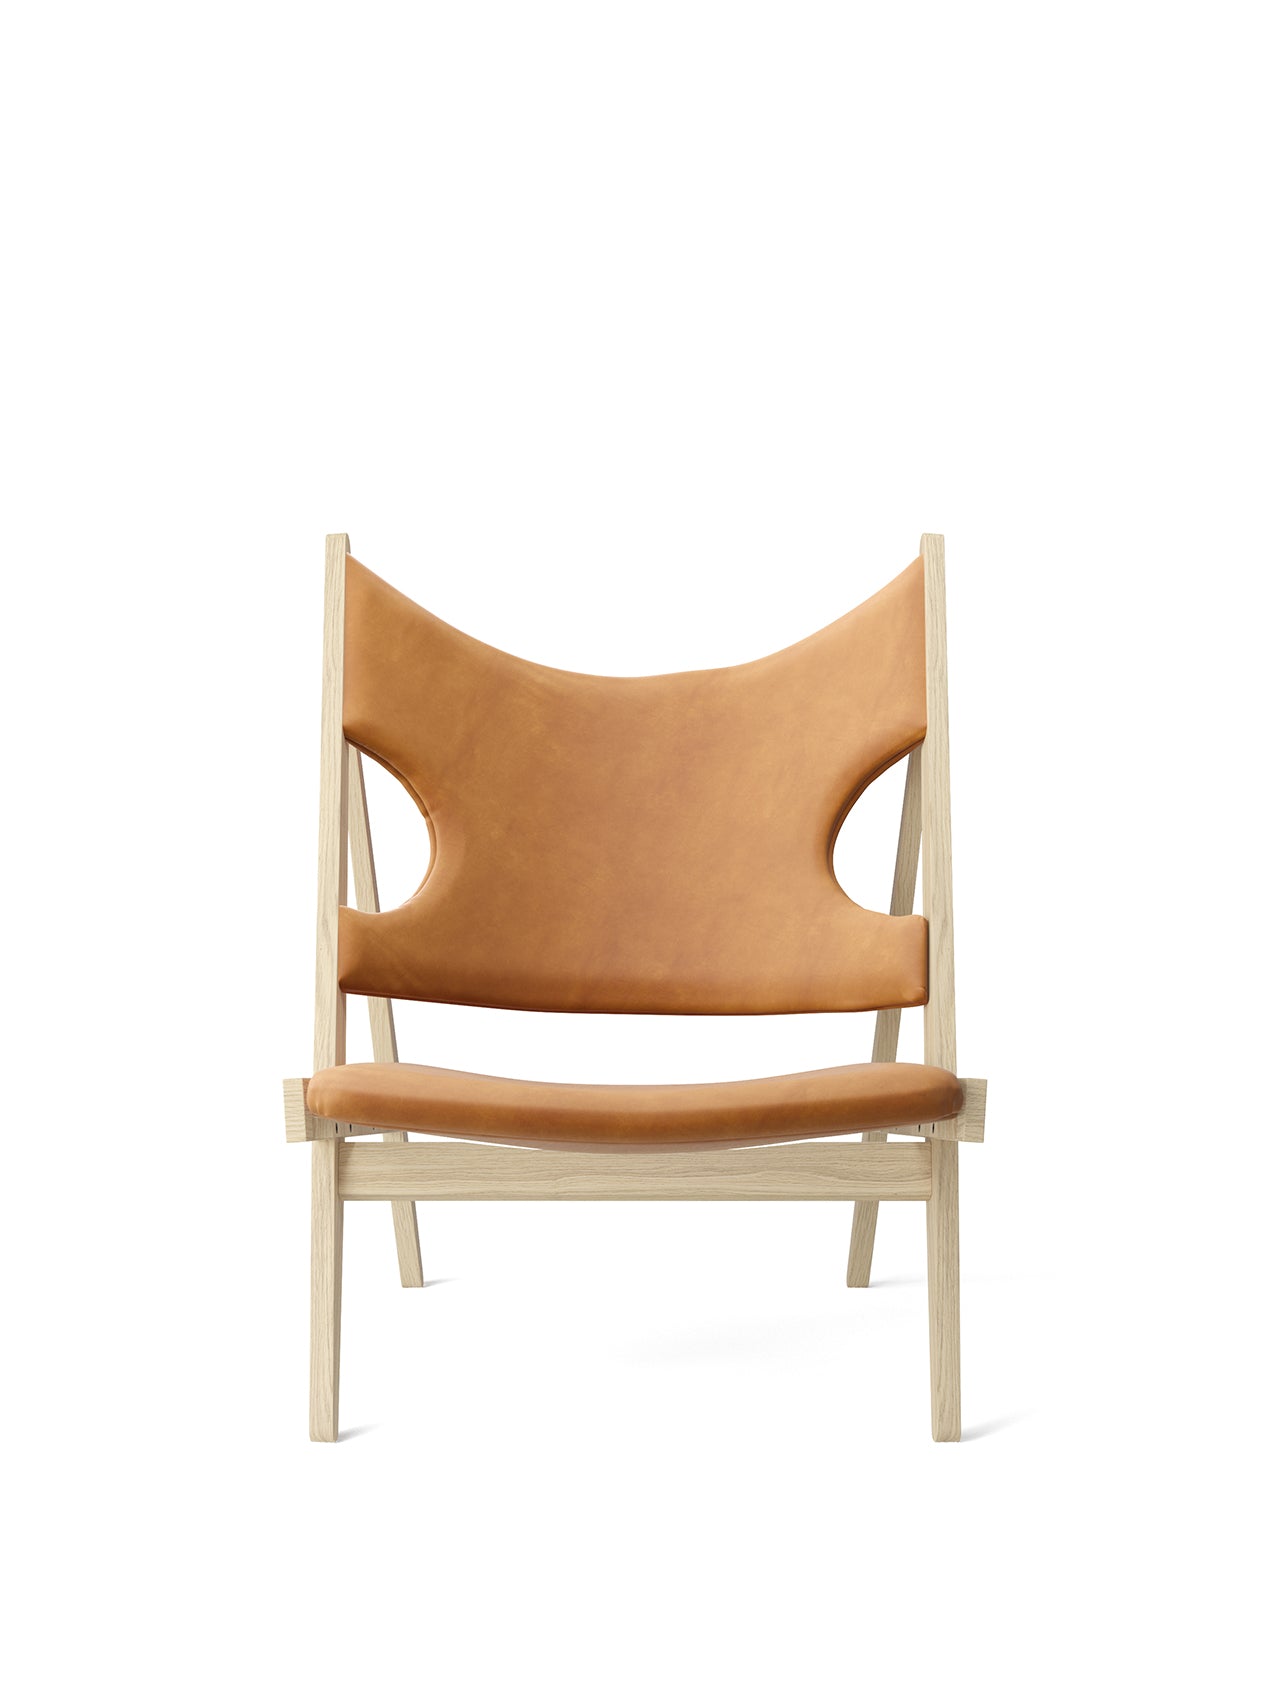 Knitting Chair by Ib Kofod-Larsen | Danish design classic | Explore